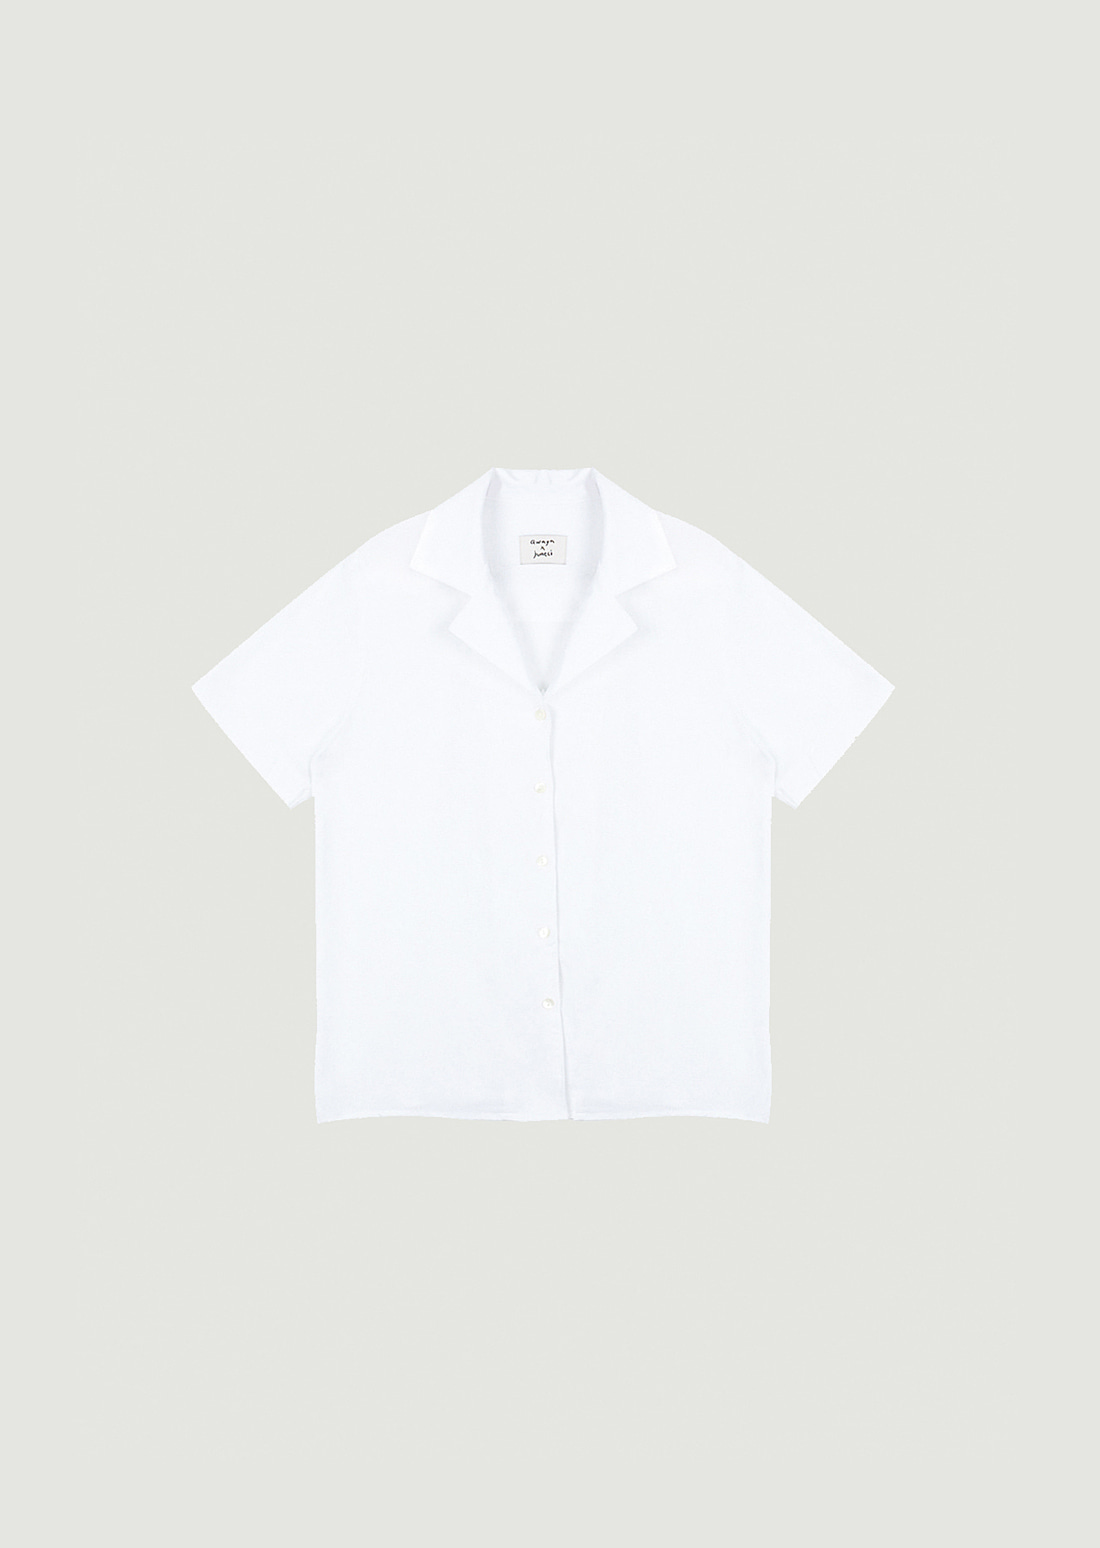 Qwaya x juneci Linen shirts (White)